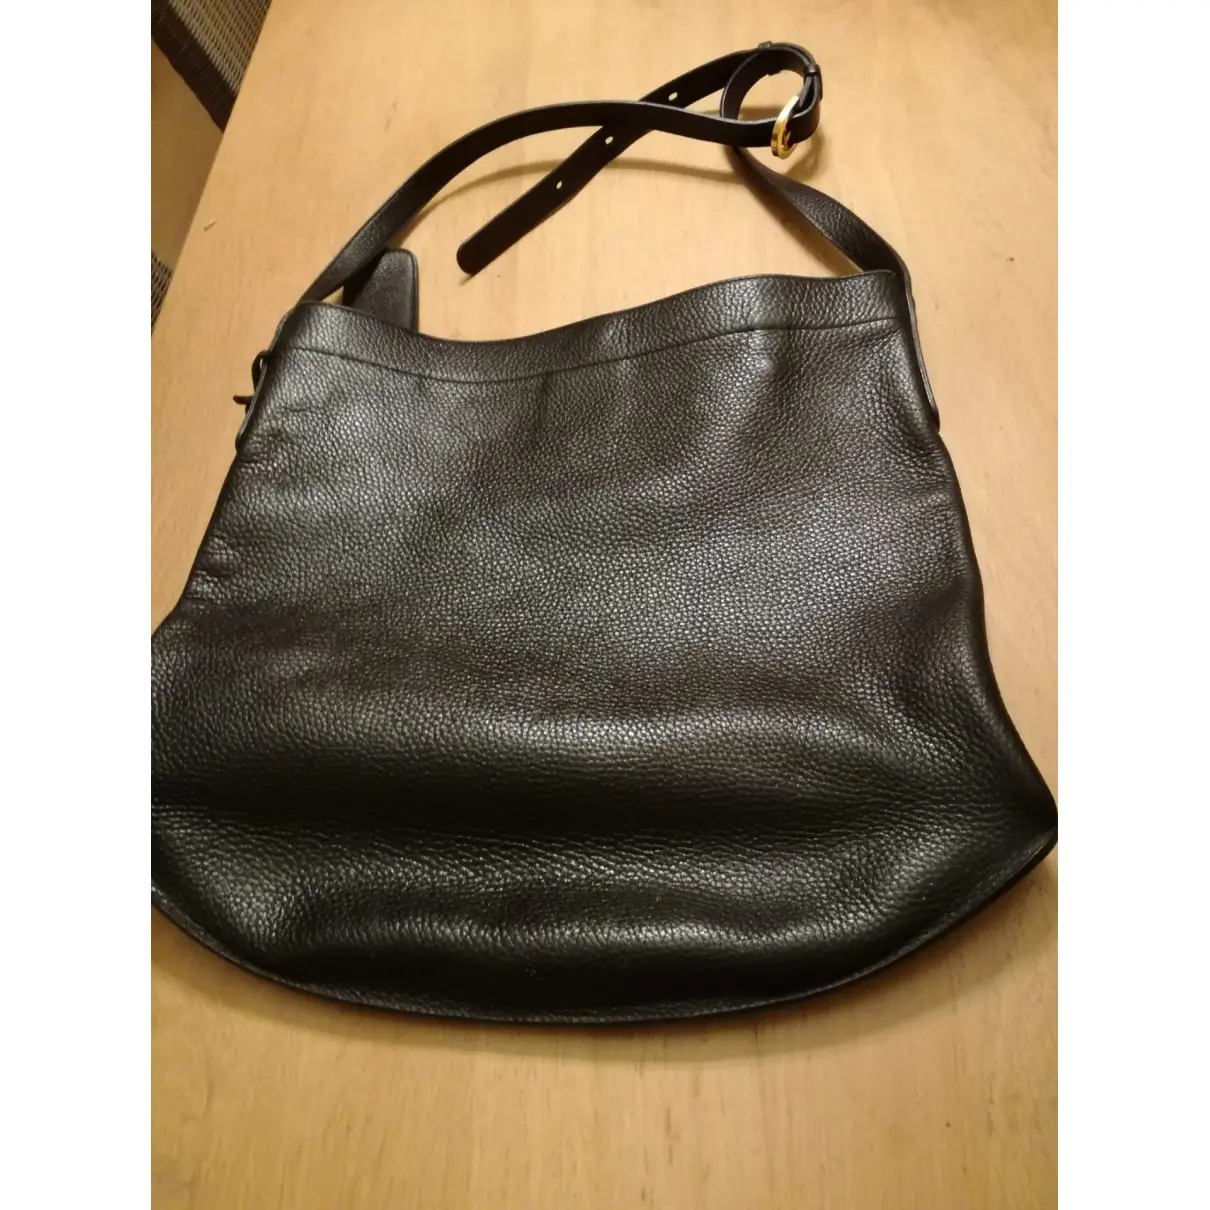 Buy Delvaux Pin leather handbag online - Vintage